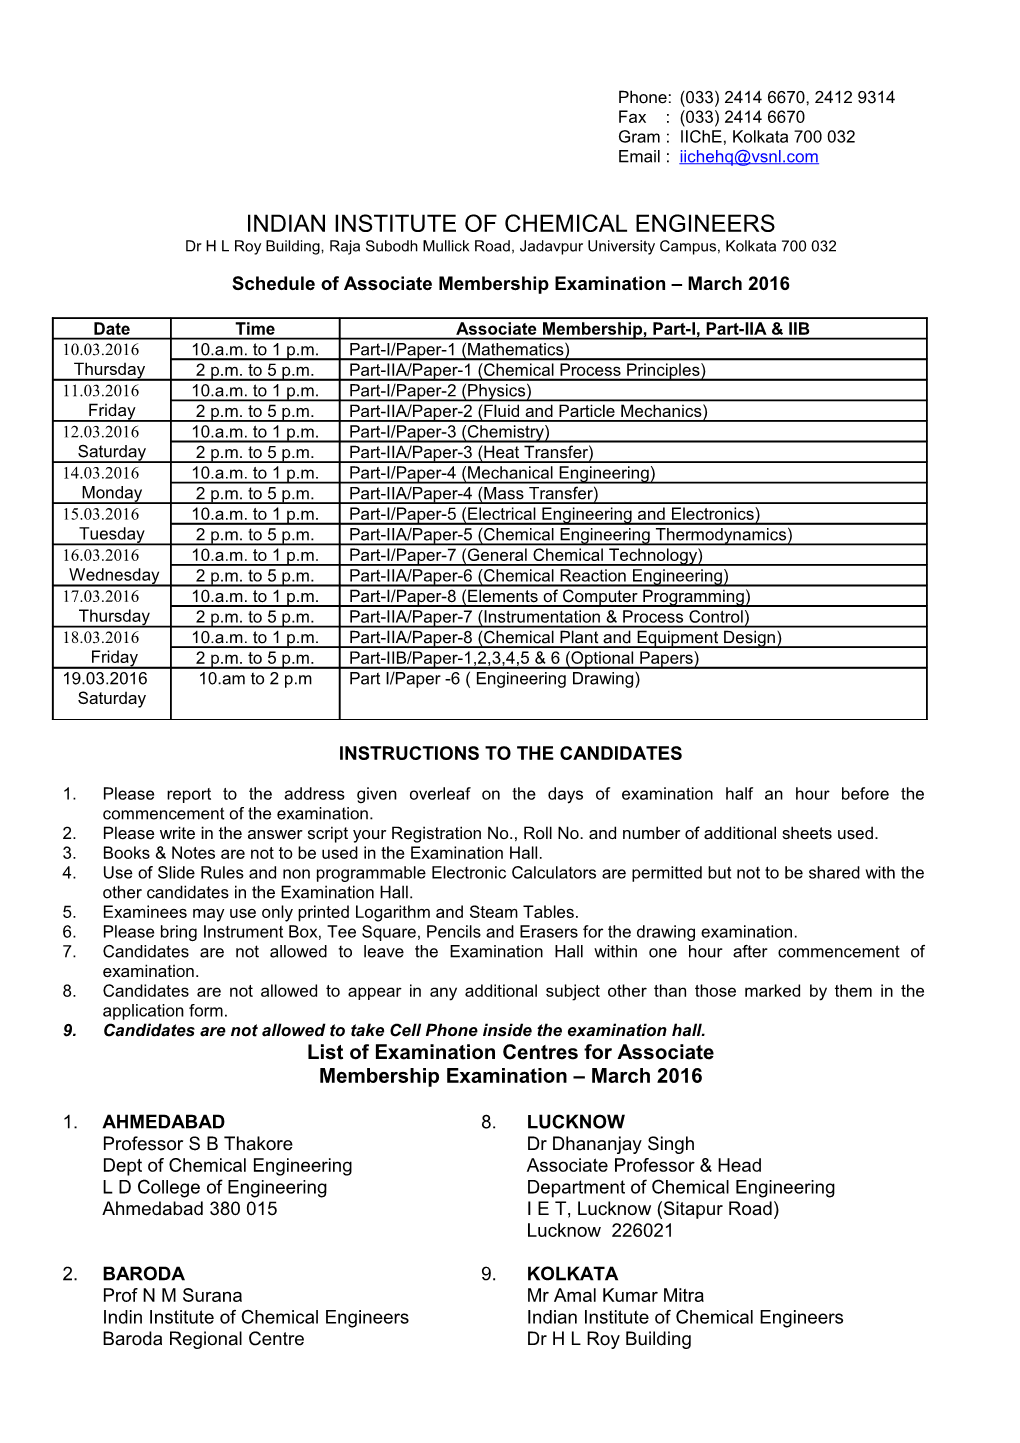 Schedule of Associate Membership Examination September 2009